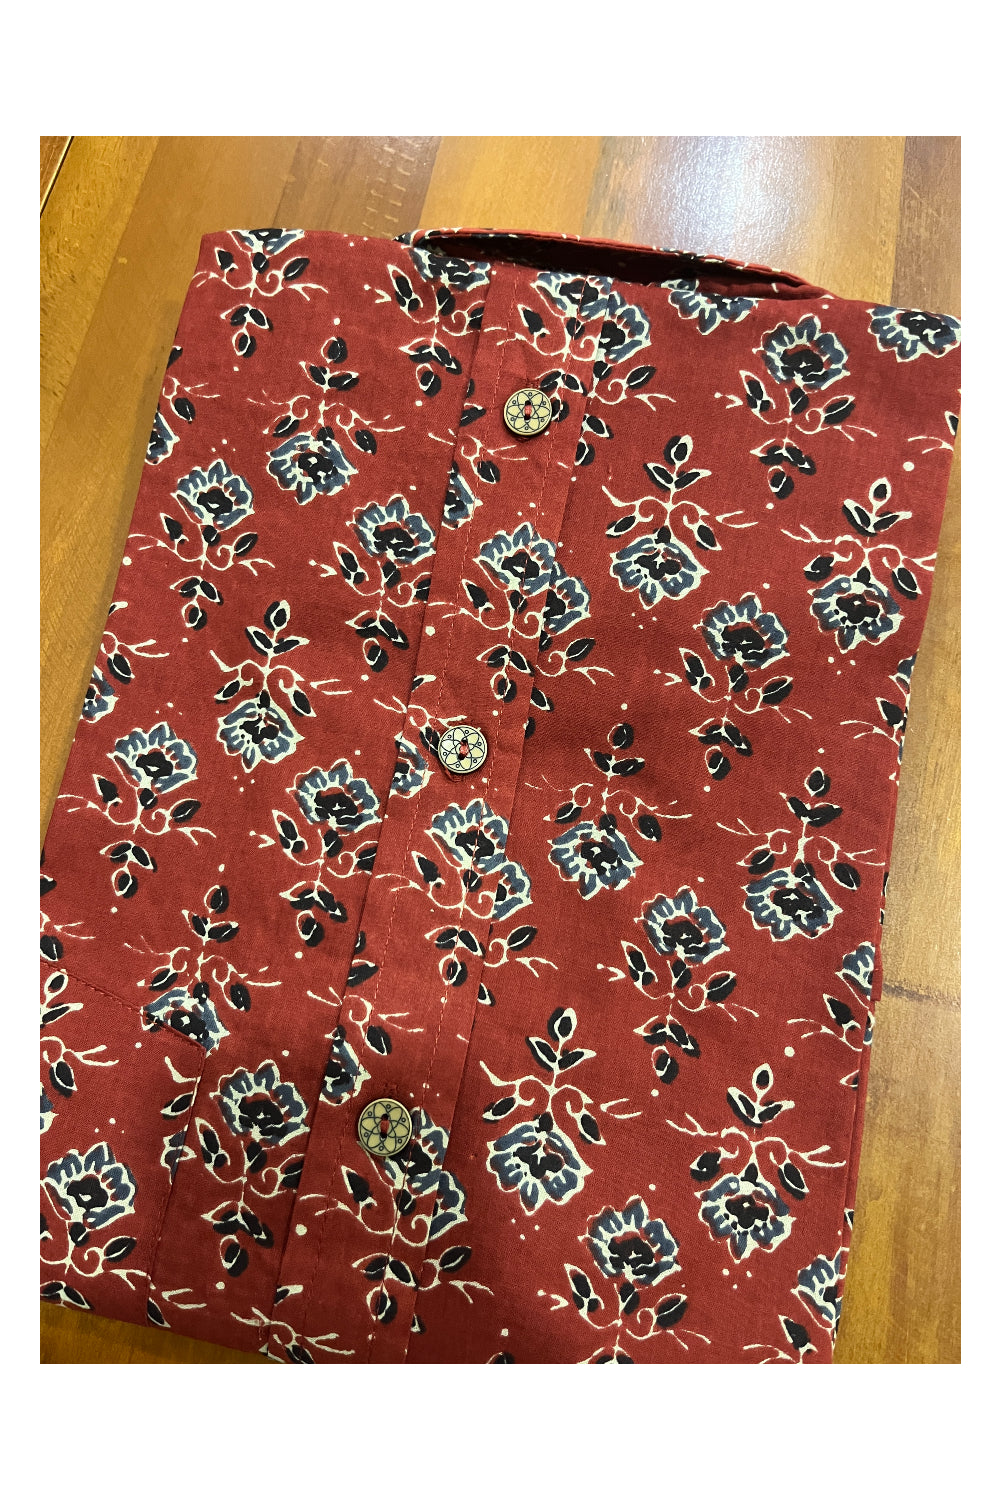 Southloom Jaipur Cotton Brick Red Hand Block Printed Shirt (Half Sleeves)